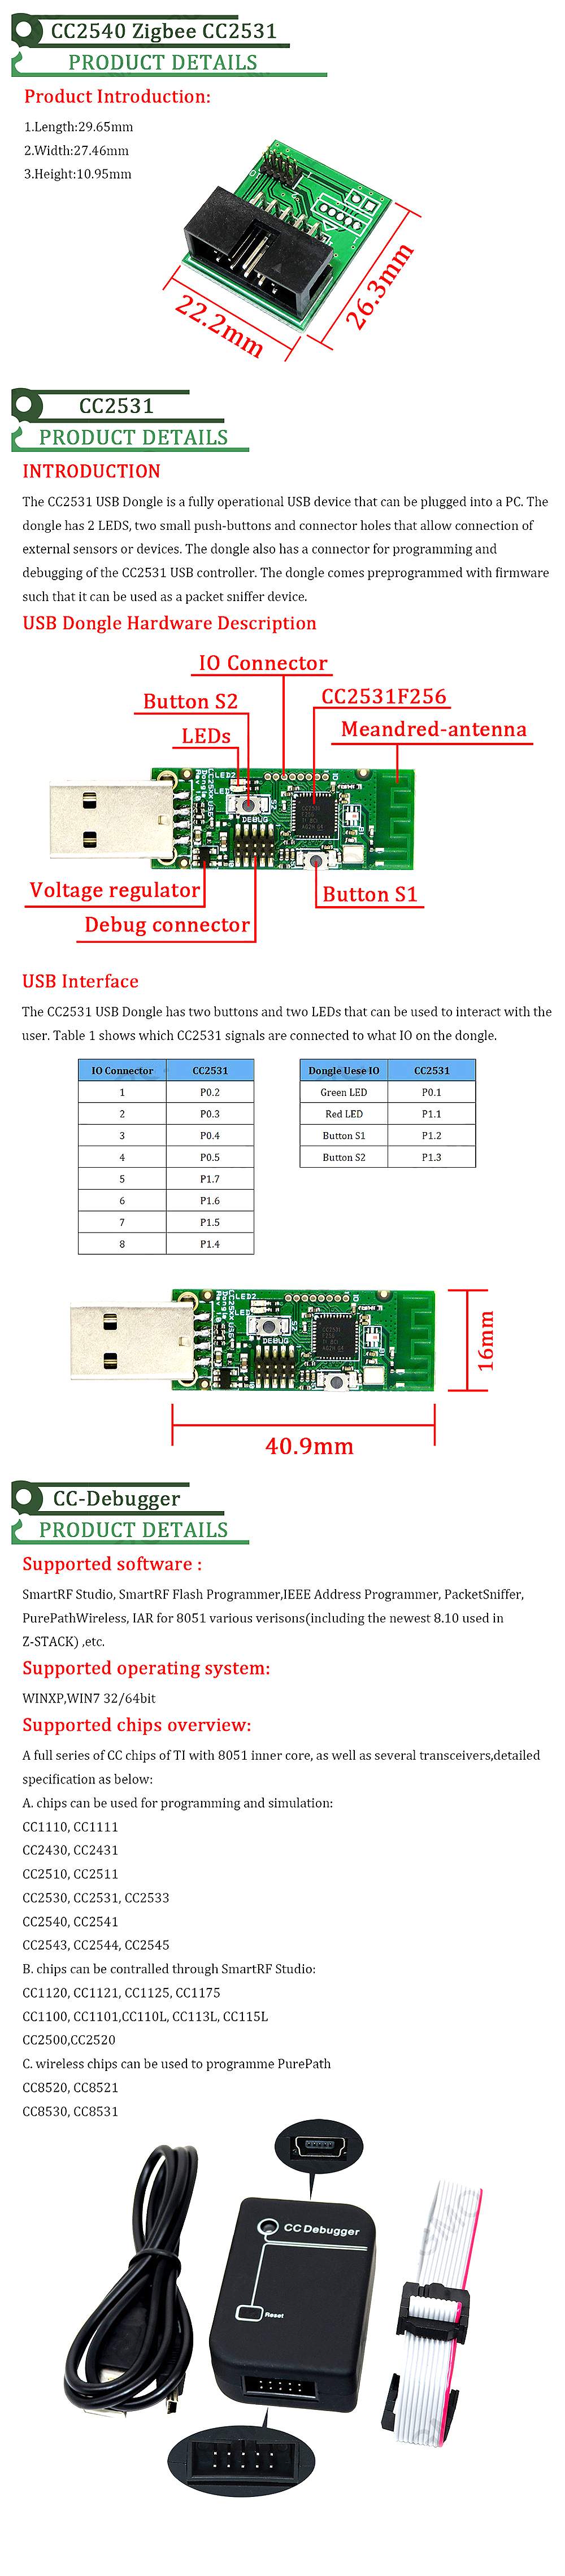 CC2531CC2540-Zigbe-Emulator-Sniffer-Downloader-Module-CC-Debugger-USB-Dongle-Analyzer-Programmer-wit-1973570-3